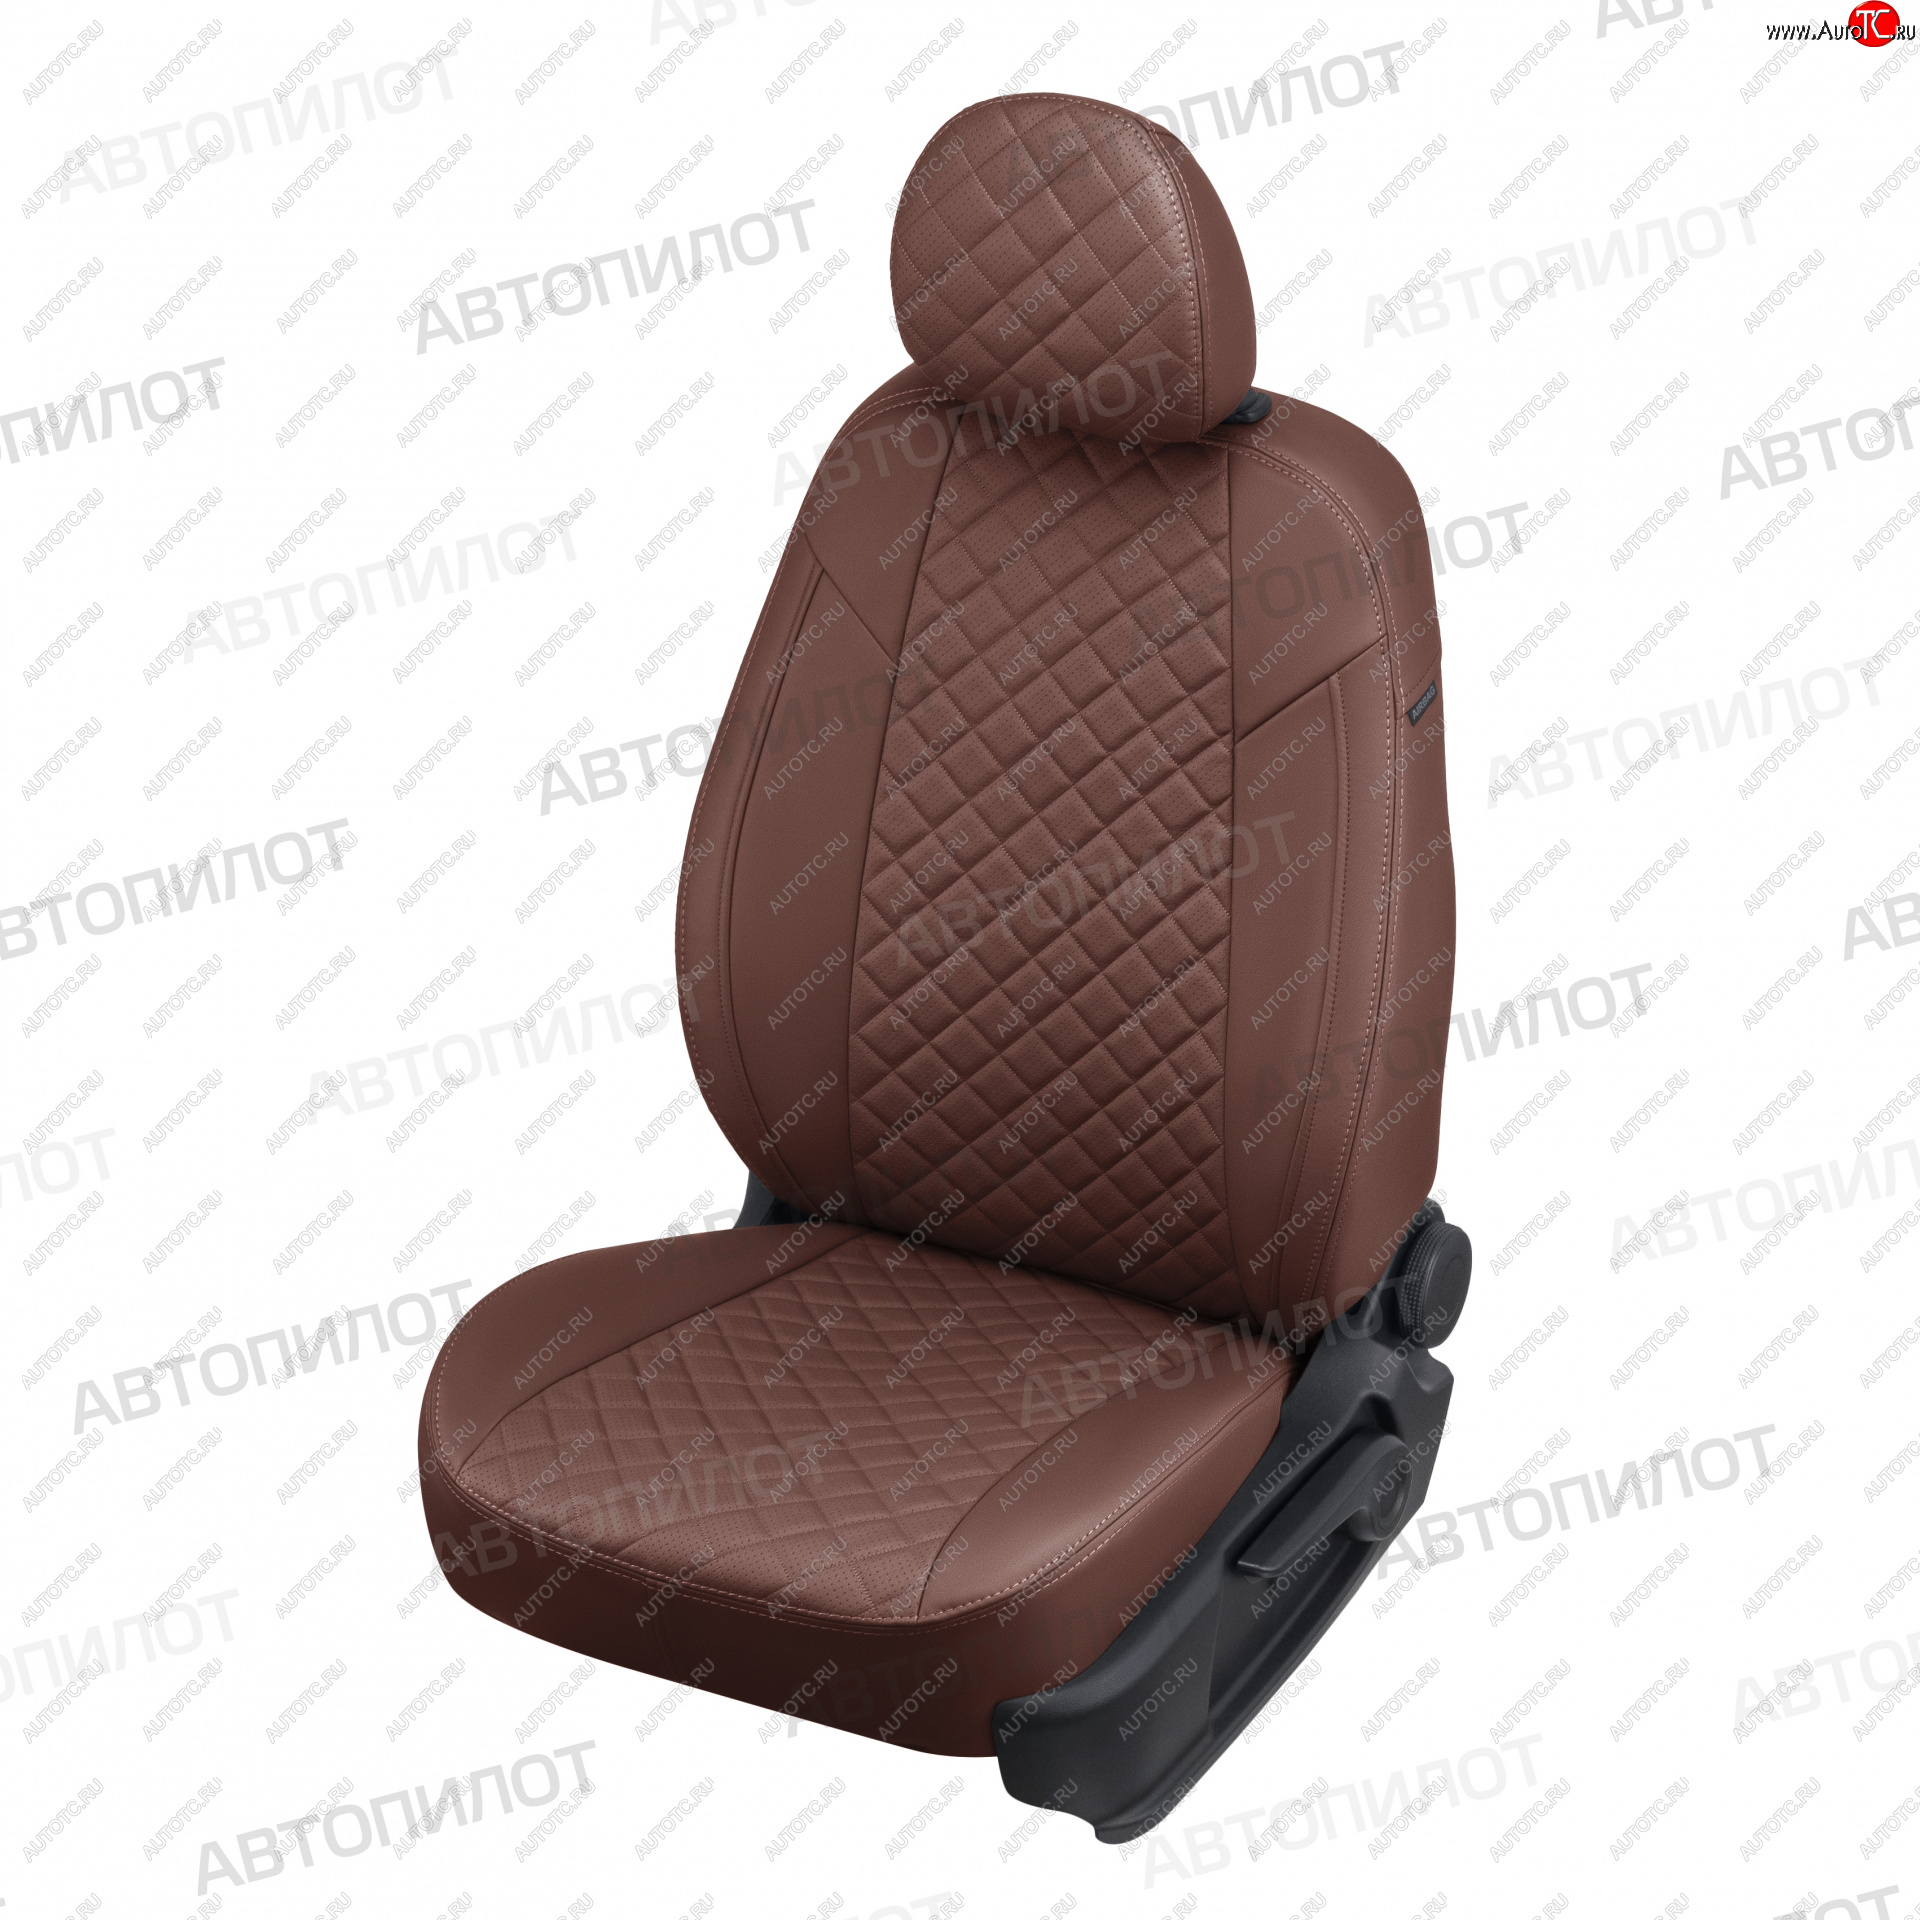 13 999 р. Чехлы сидений (экокожа) Автопилот Ромб  Ford Ka  1 (1996-2008) (темно-коричневый)